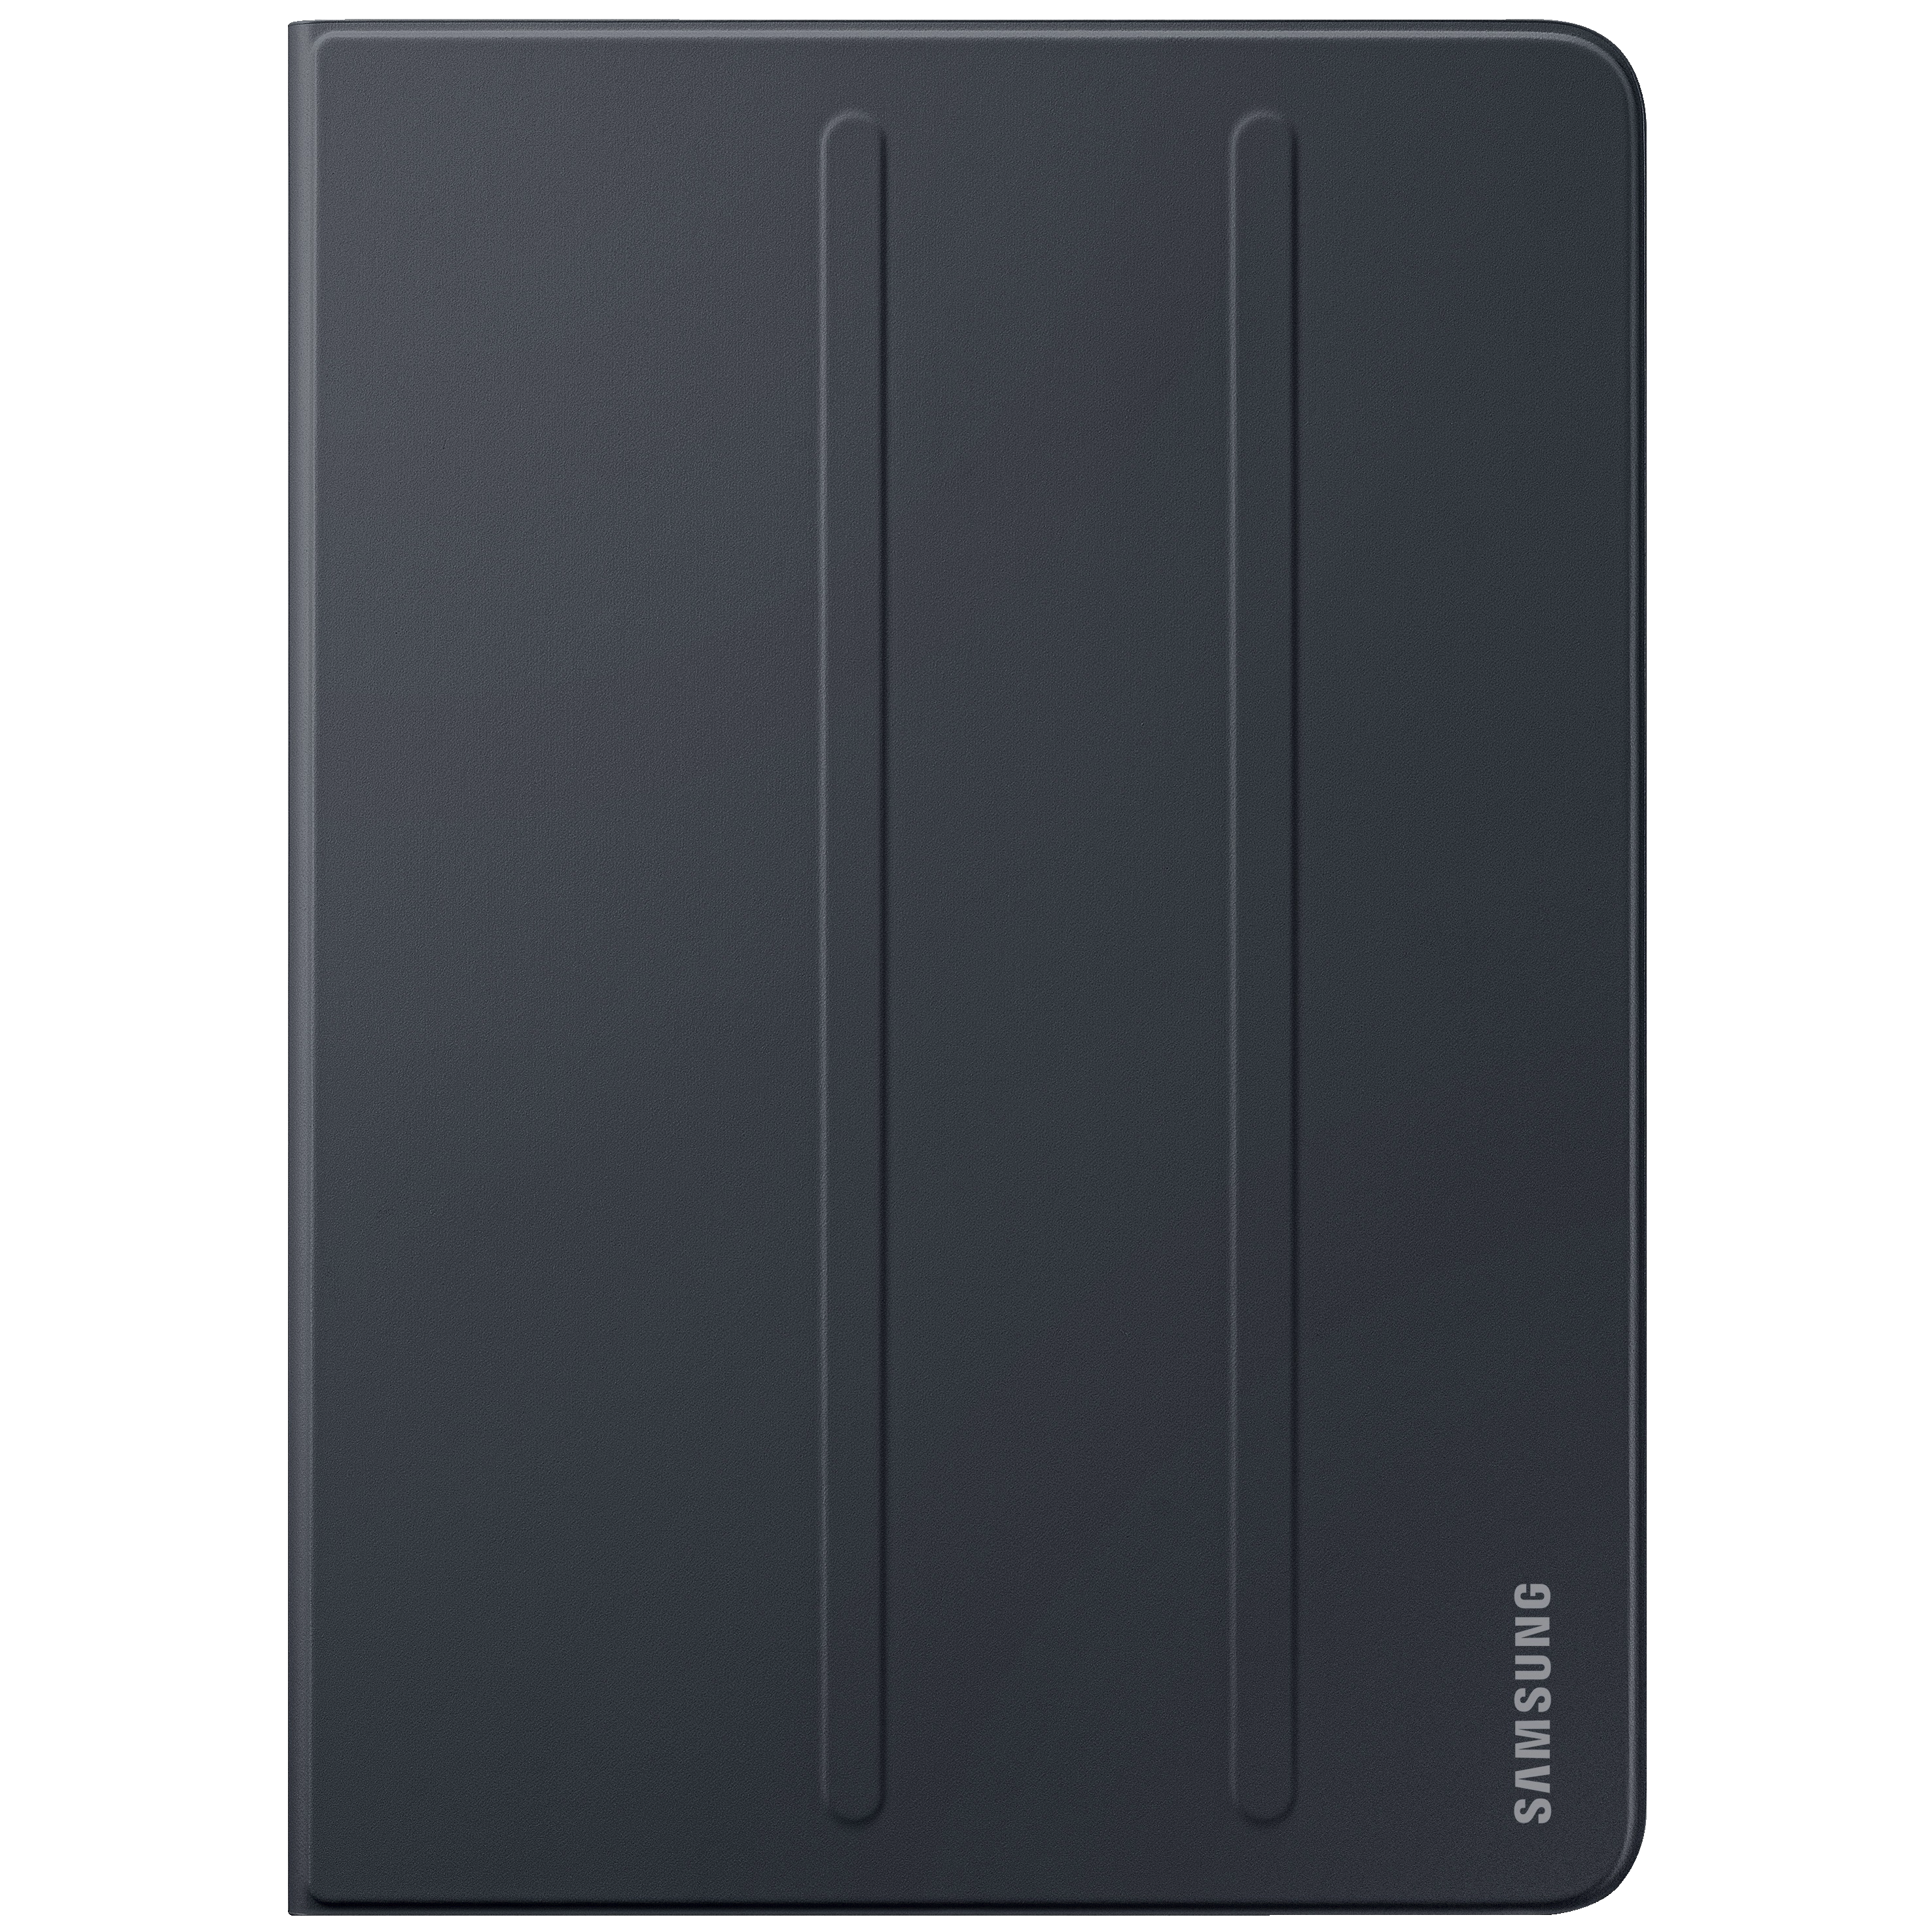 Samsung Galaxy Tab S3 etui (sort) - Tilbehør iPad og nettbrett - Elkjøp